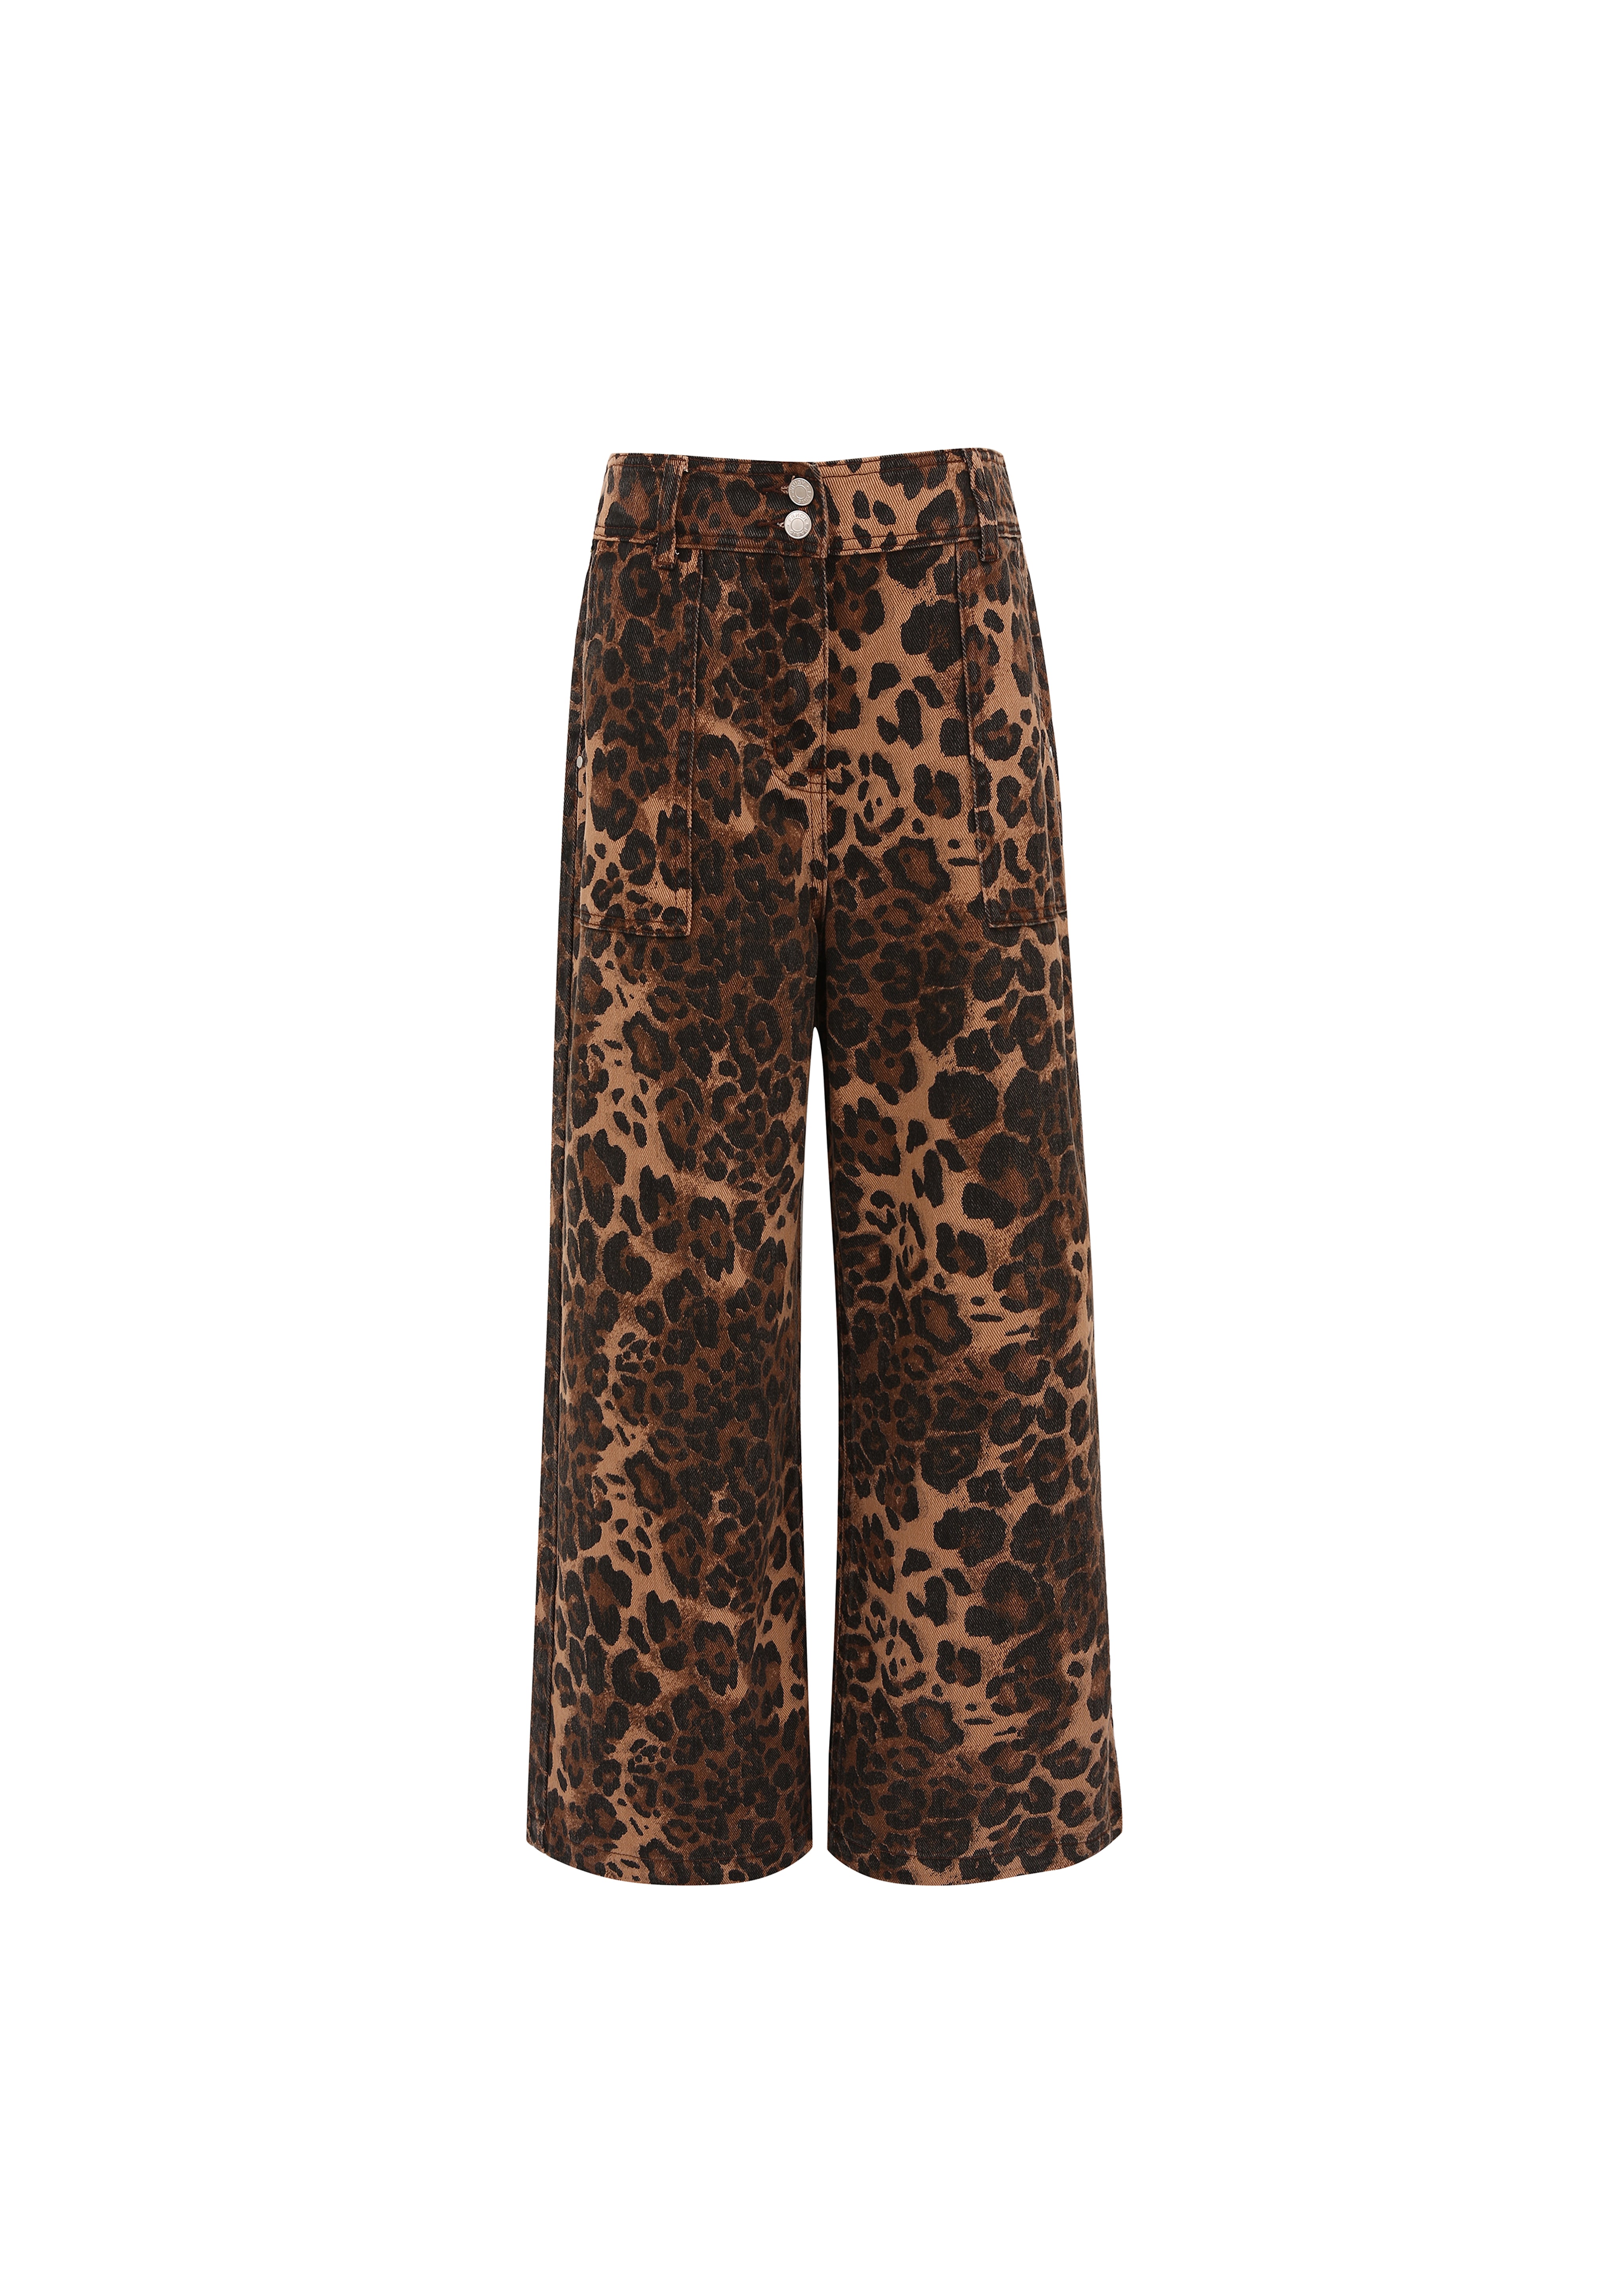 PRUNELLA Leopard Jeans